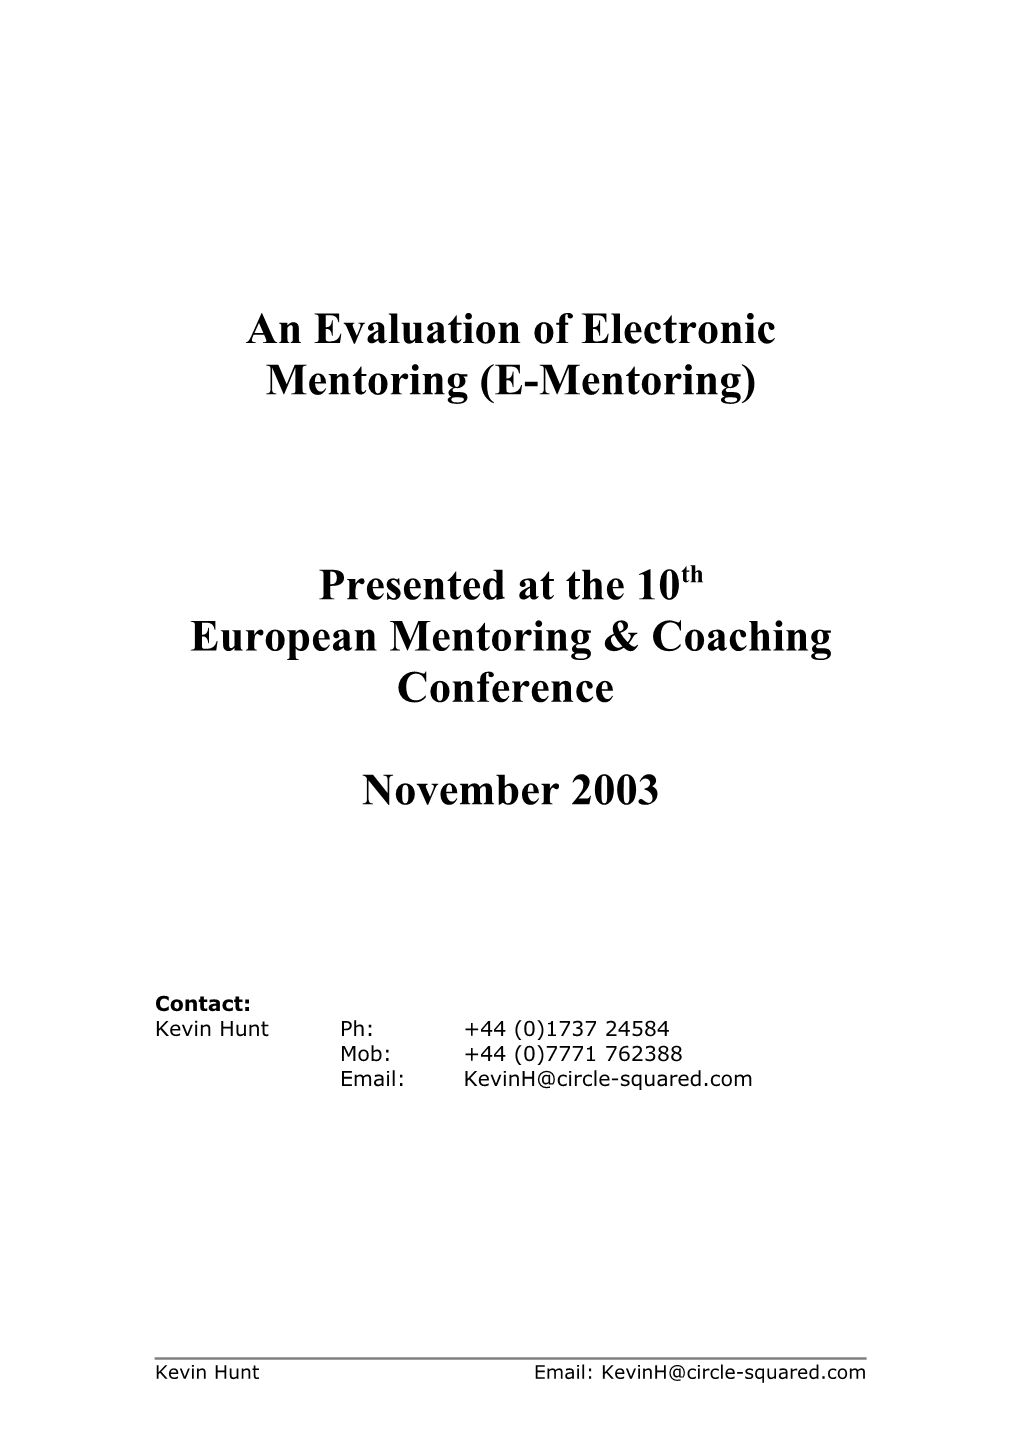 Evaluation of E-Ementoring